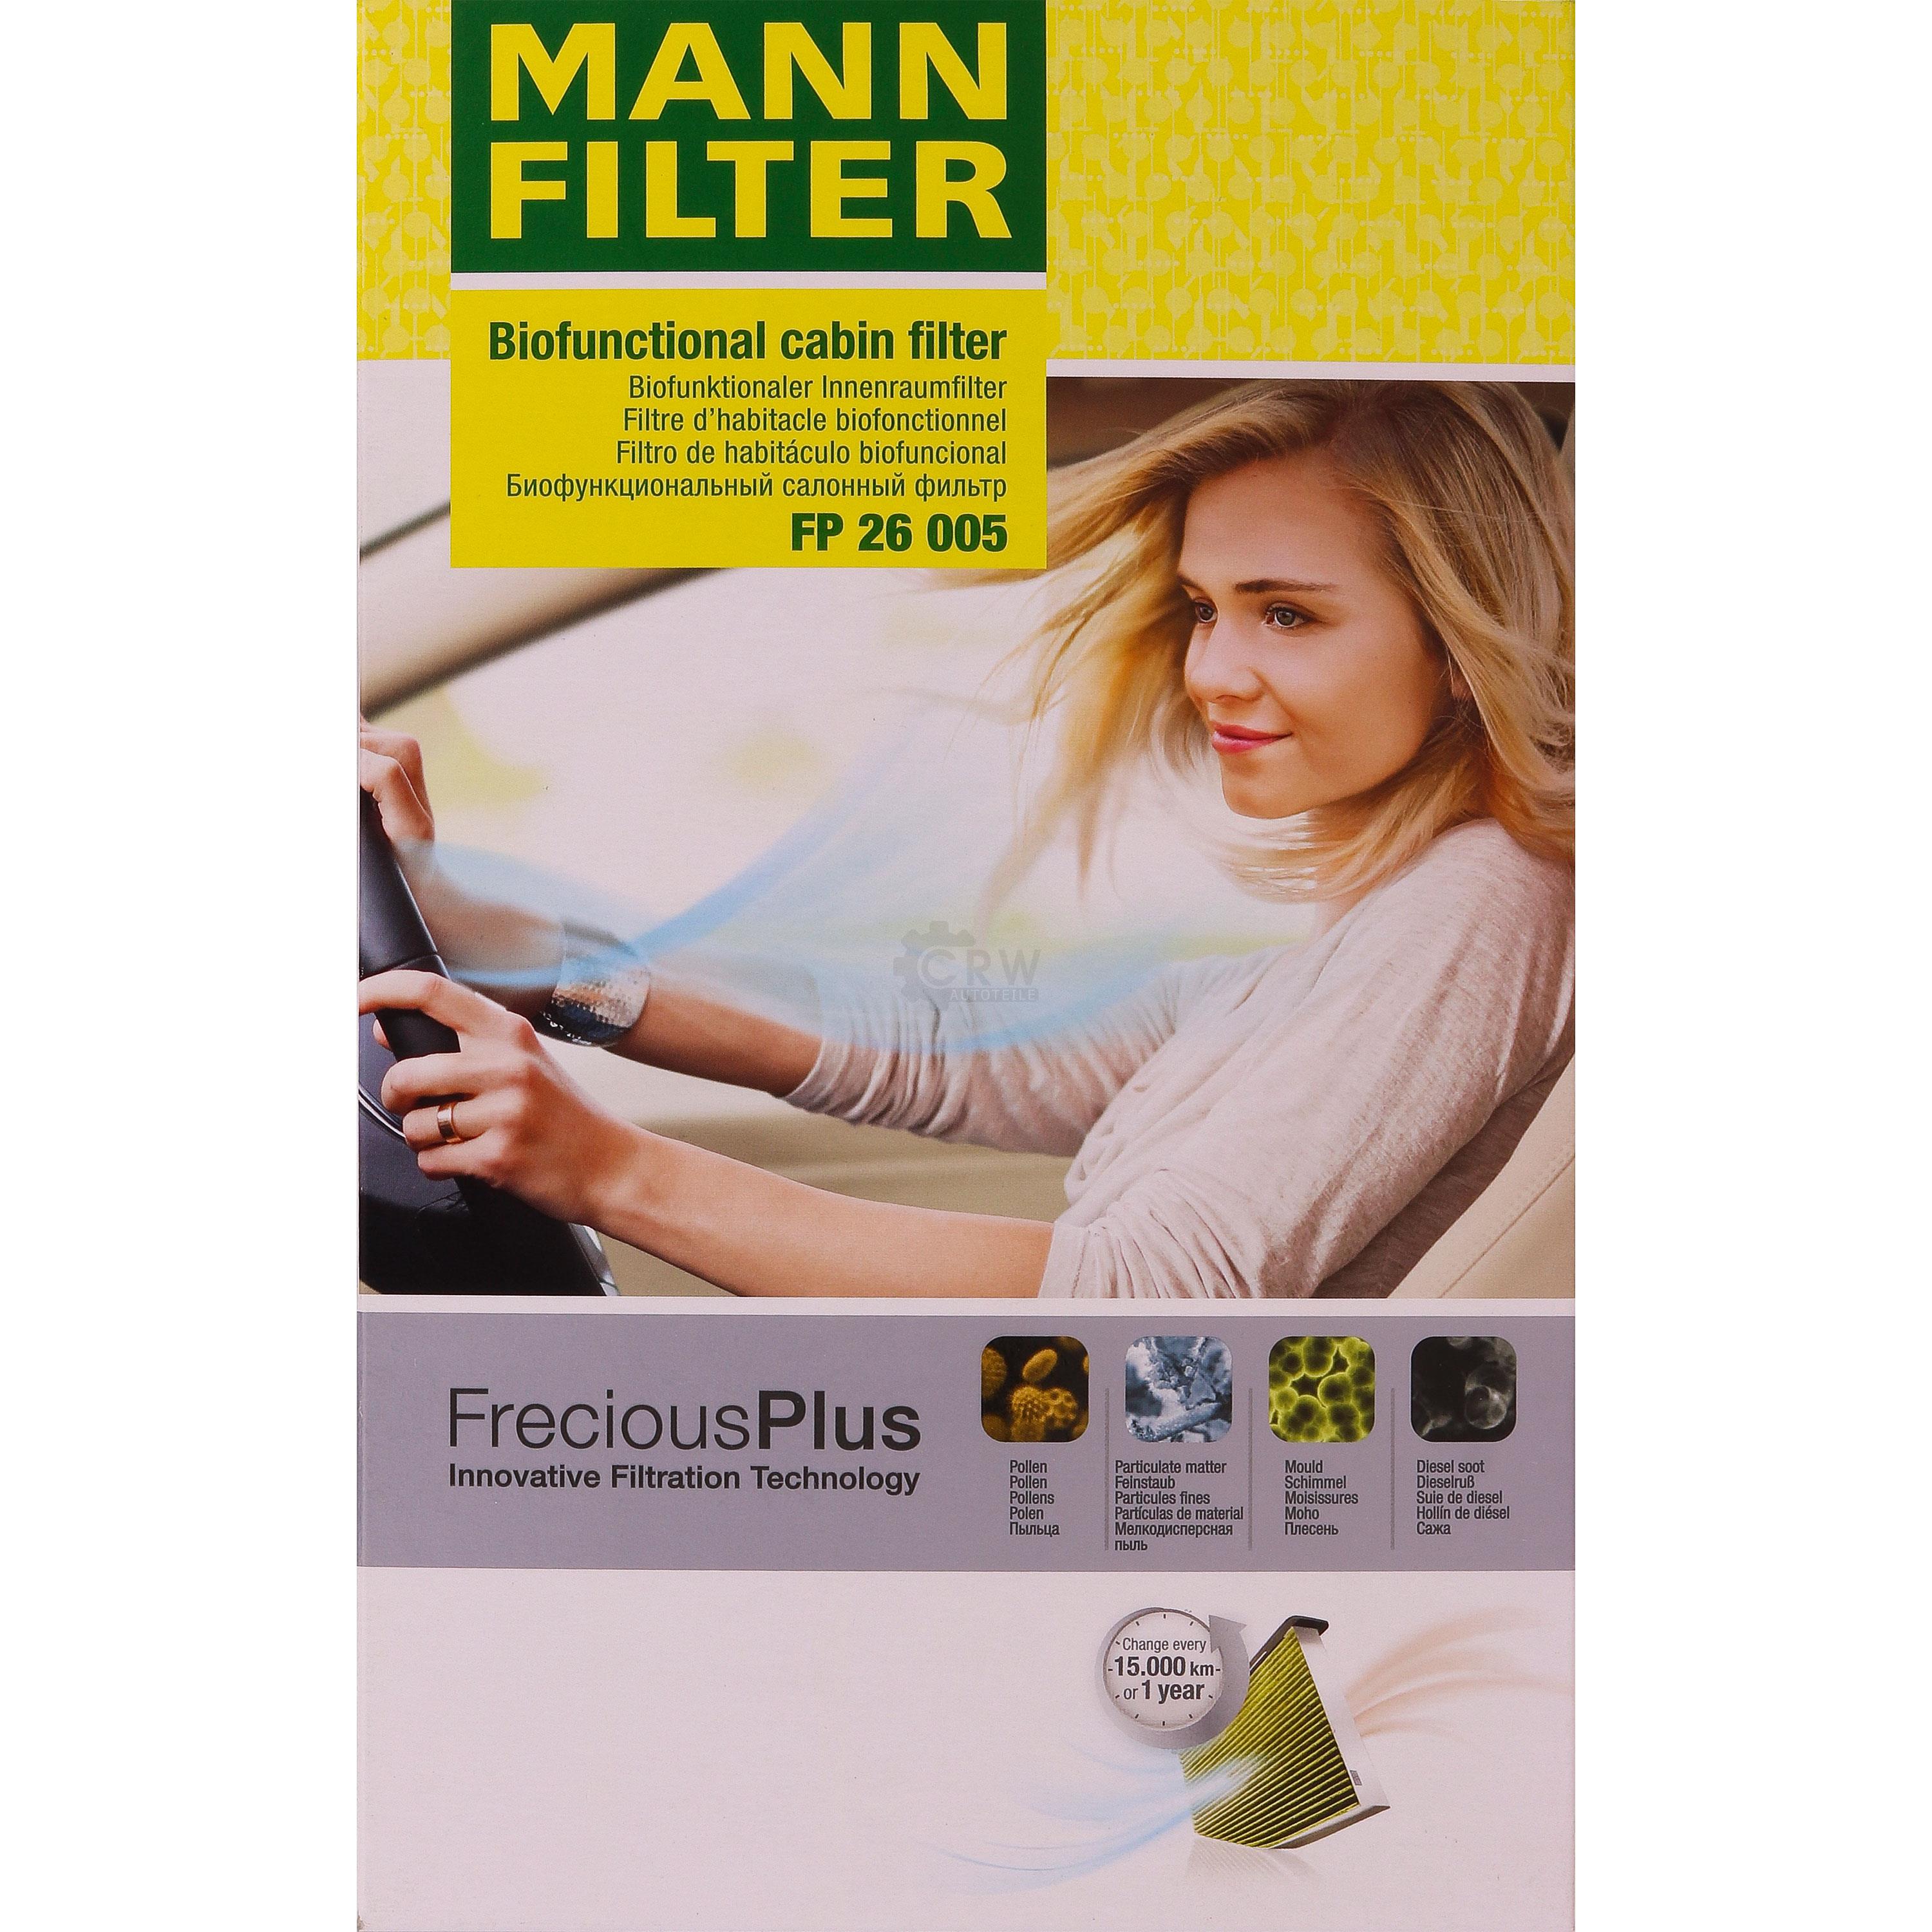 MANN-Filter Innenraumfilter Biofunctional für Allergiker FP 26 005